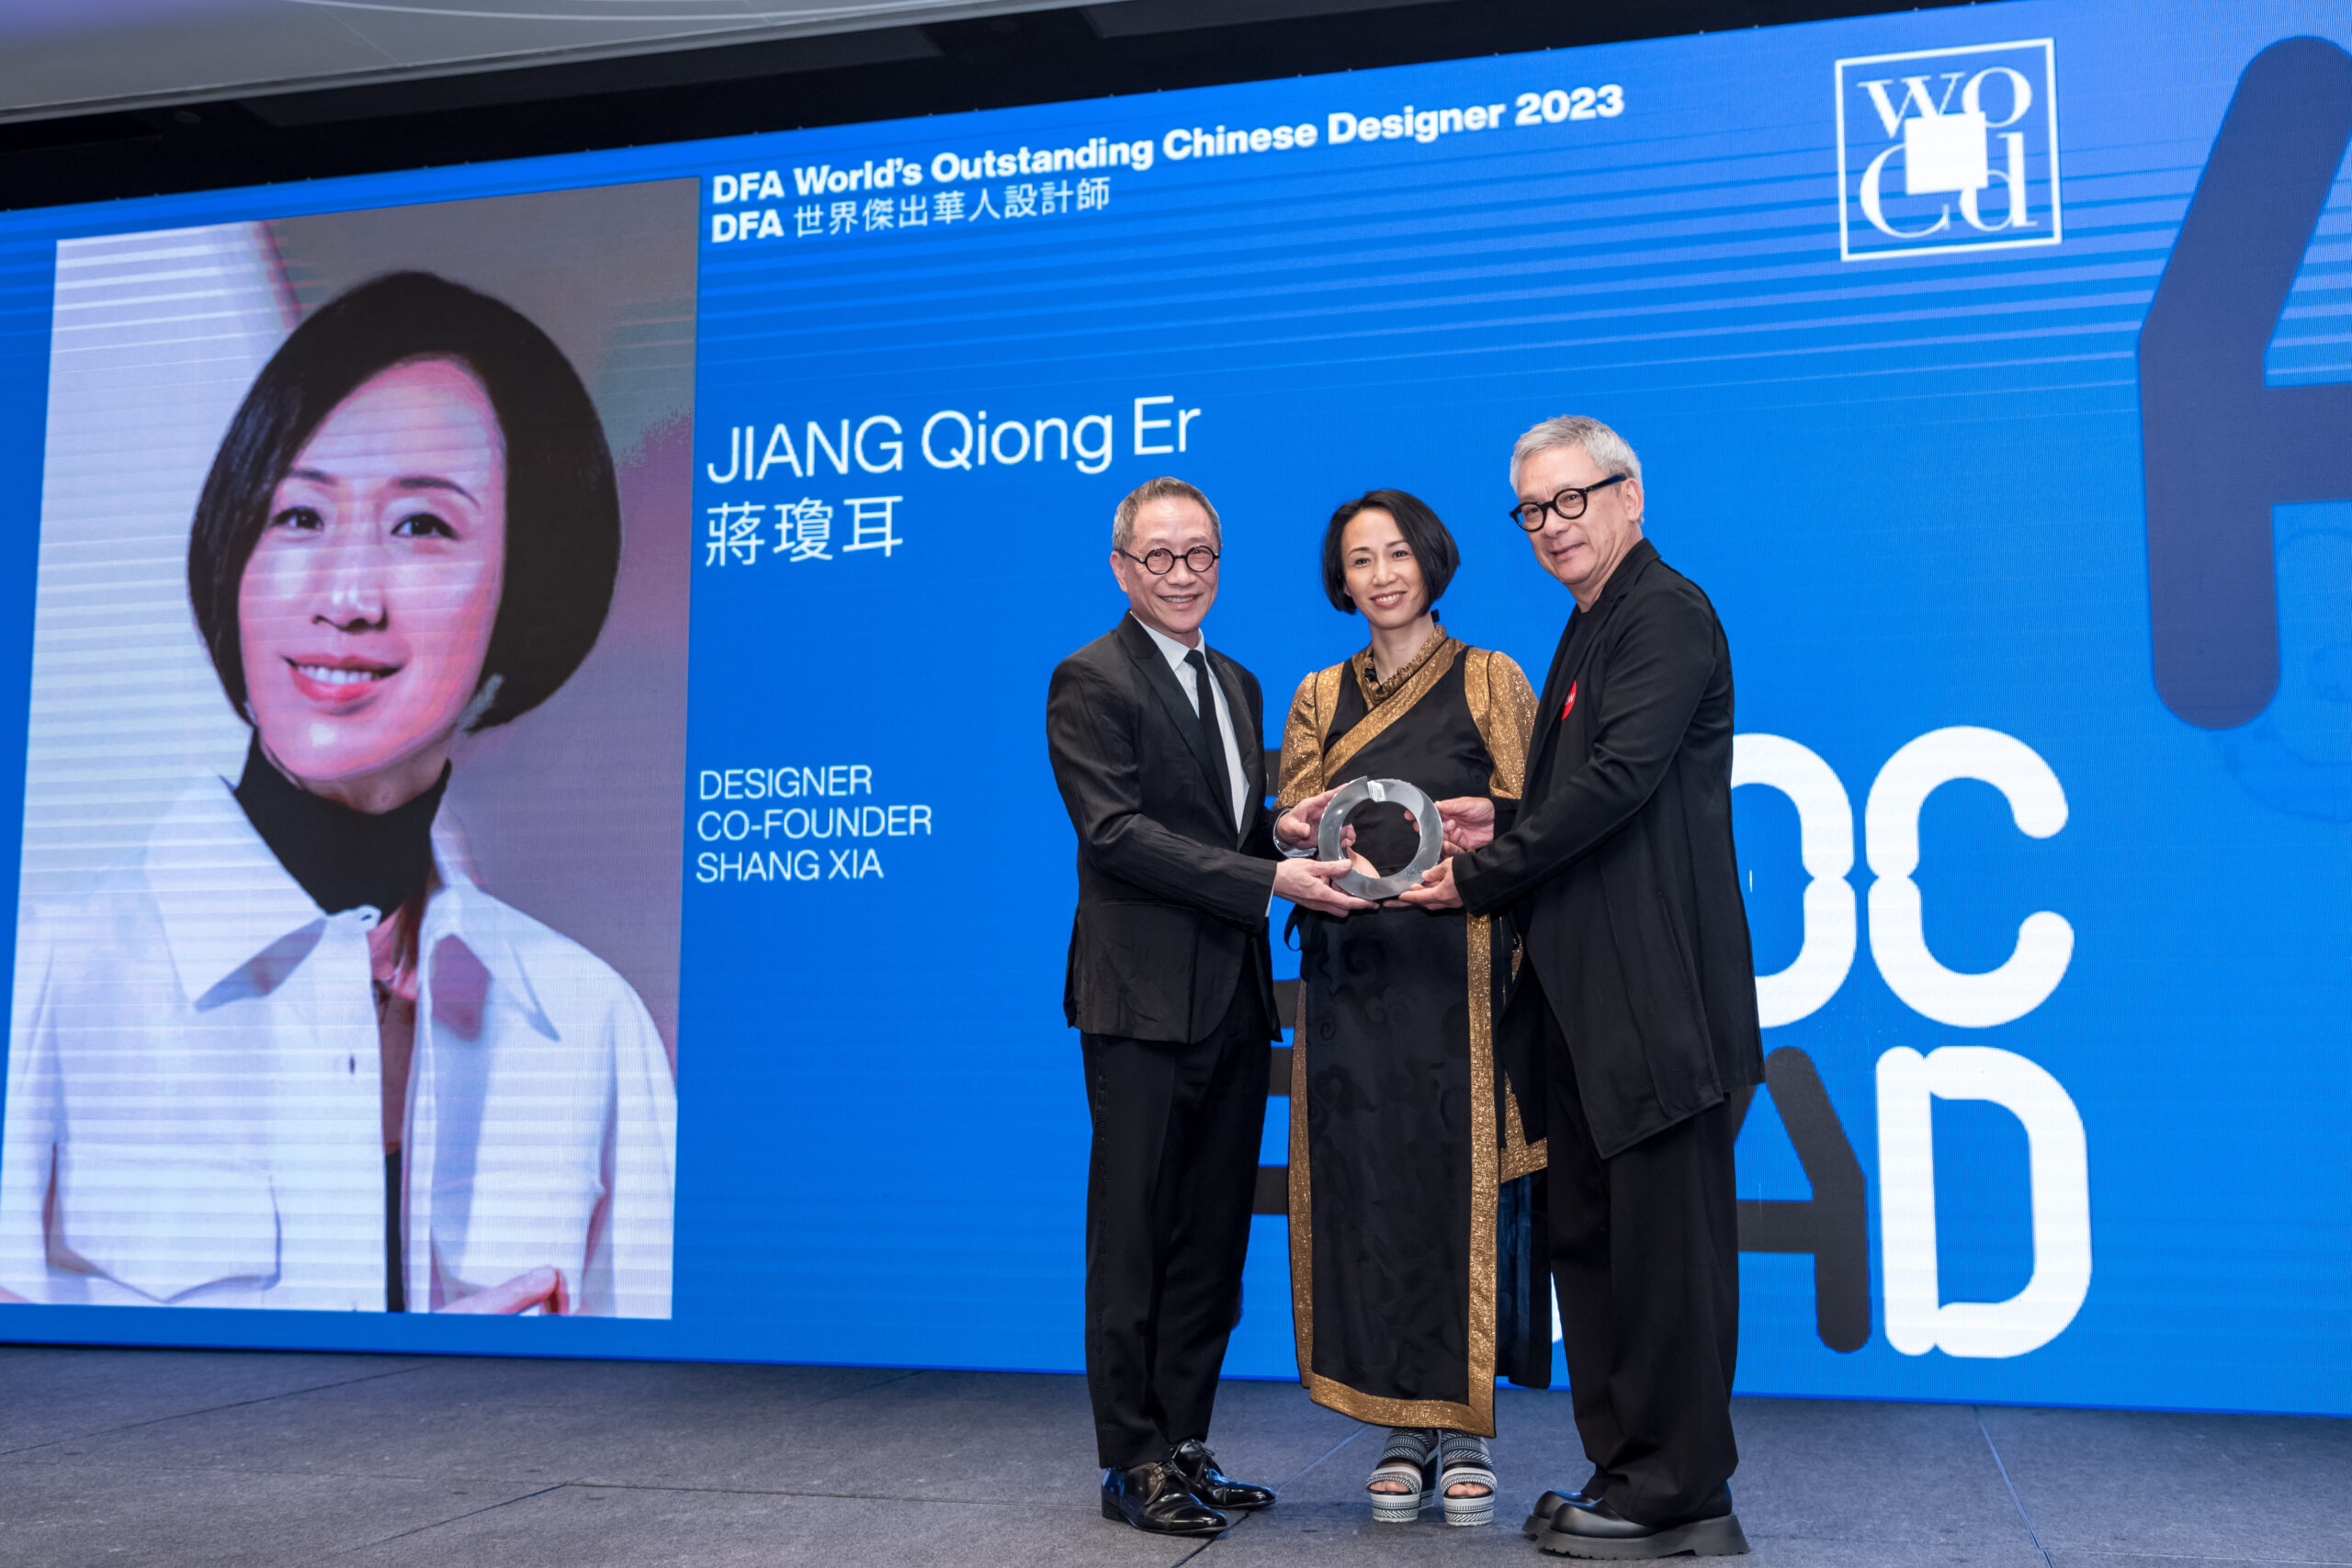 Jiang Qiong Er Receives DFA World’s Outstanding Chinese Designer Award